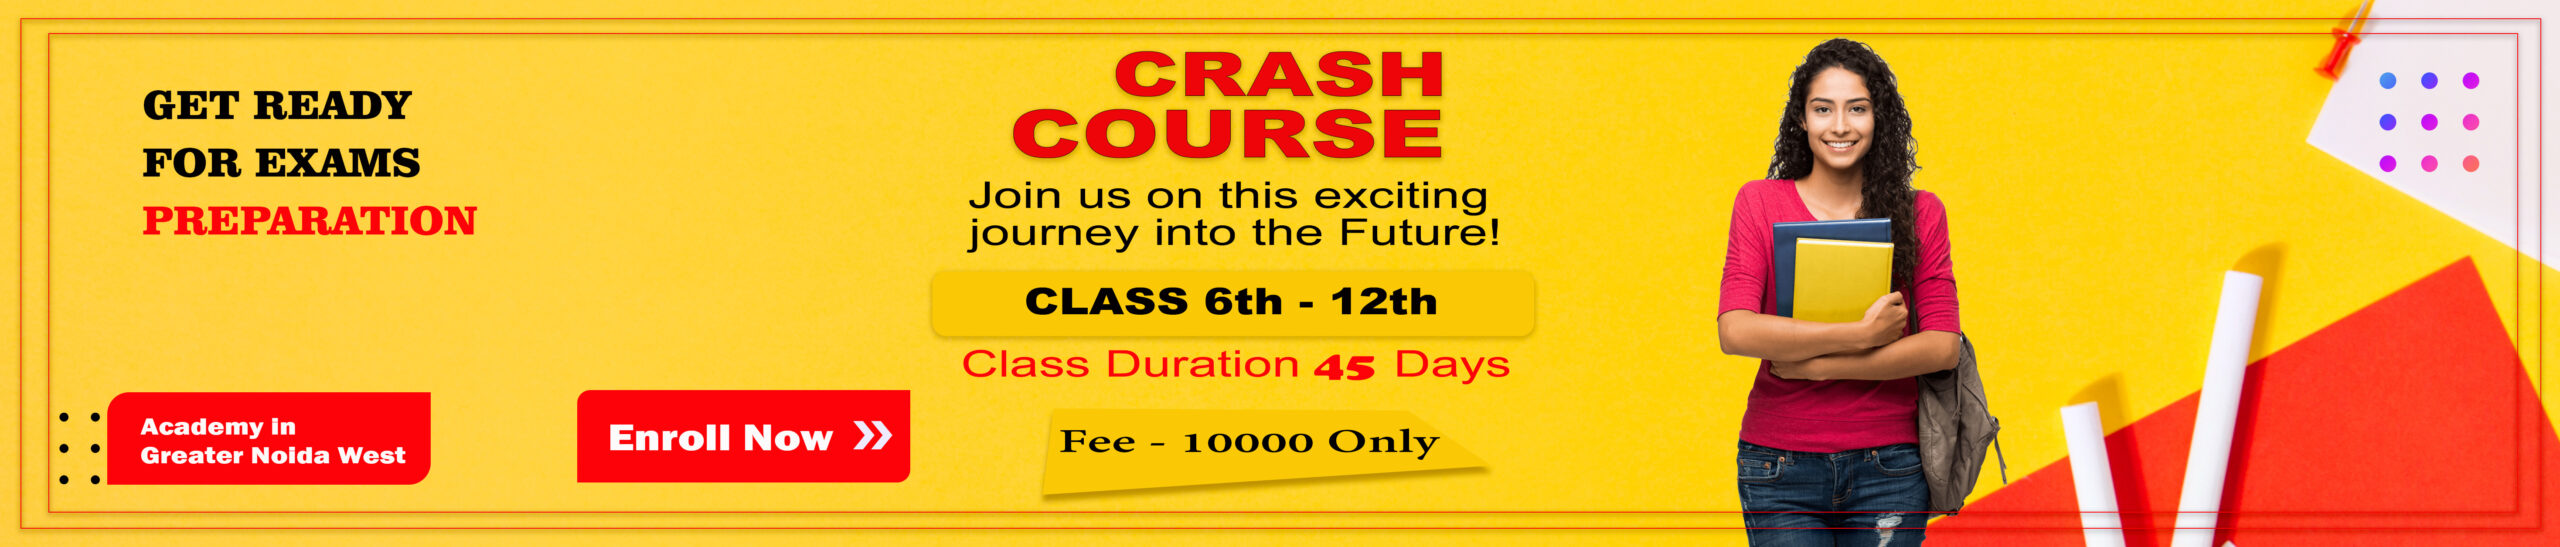 crash_course__1_